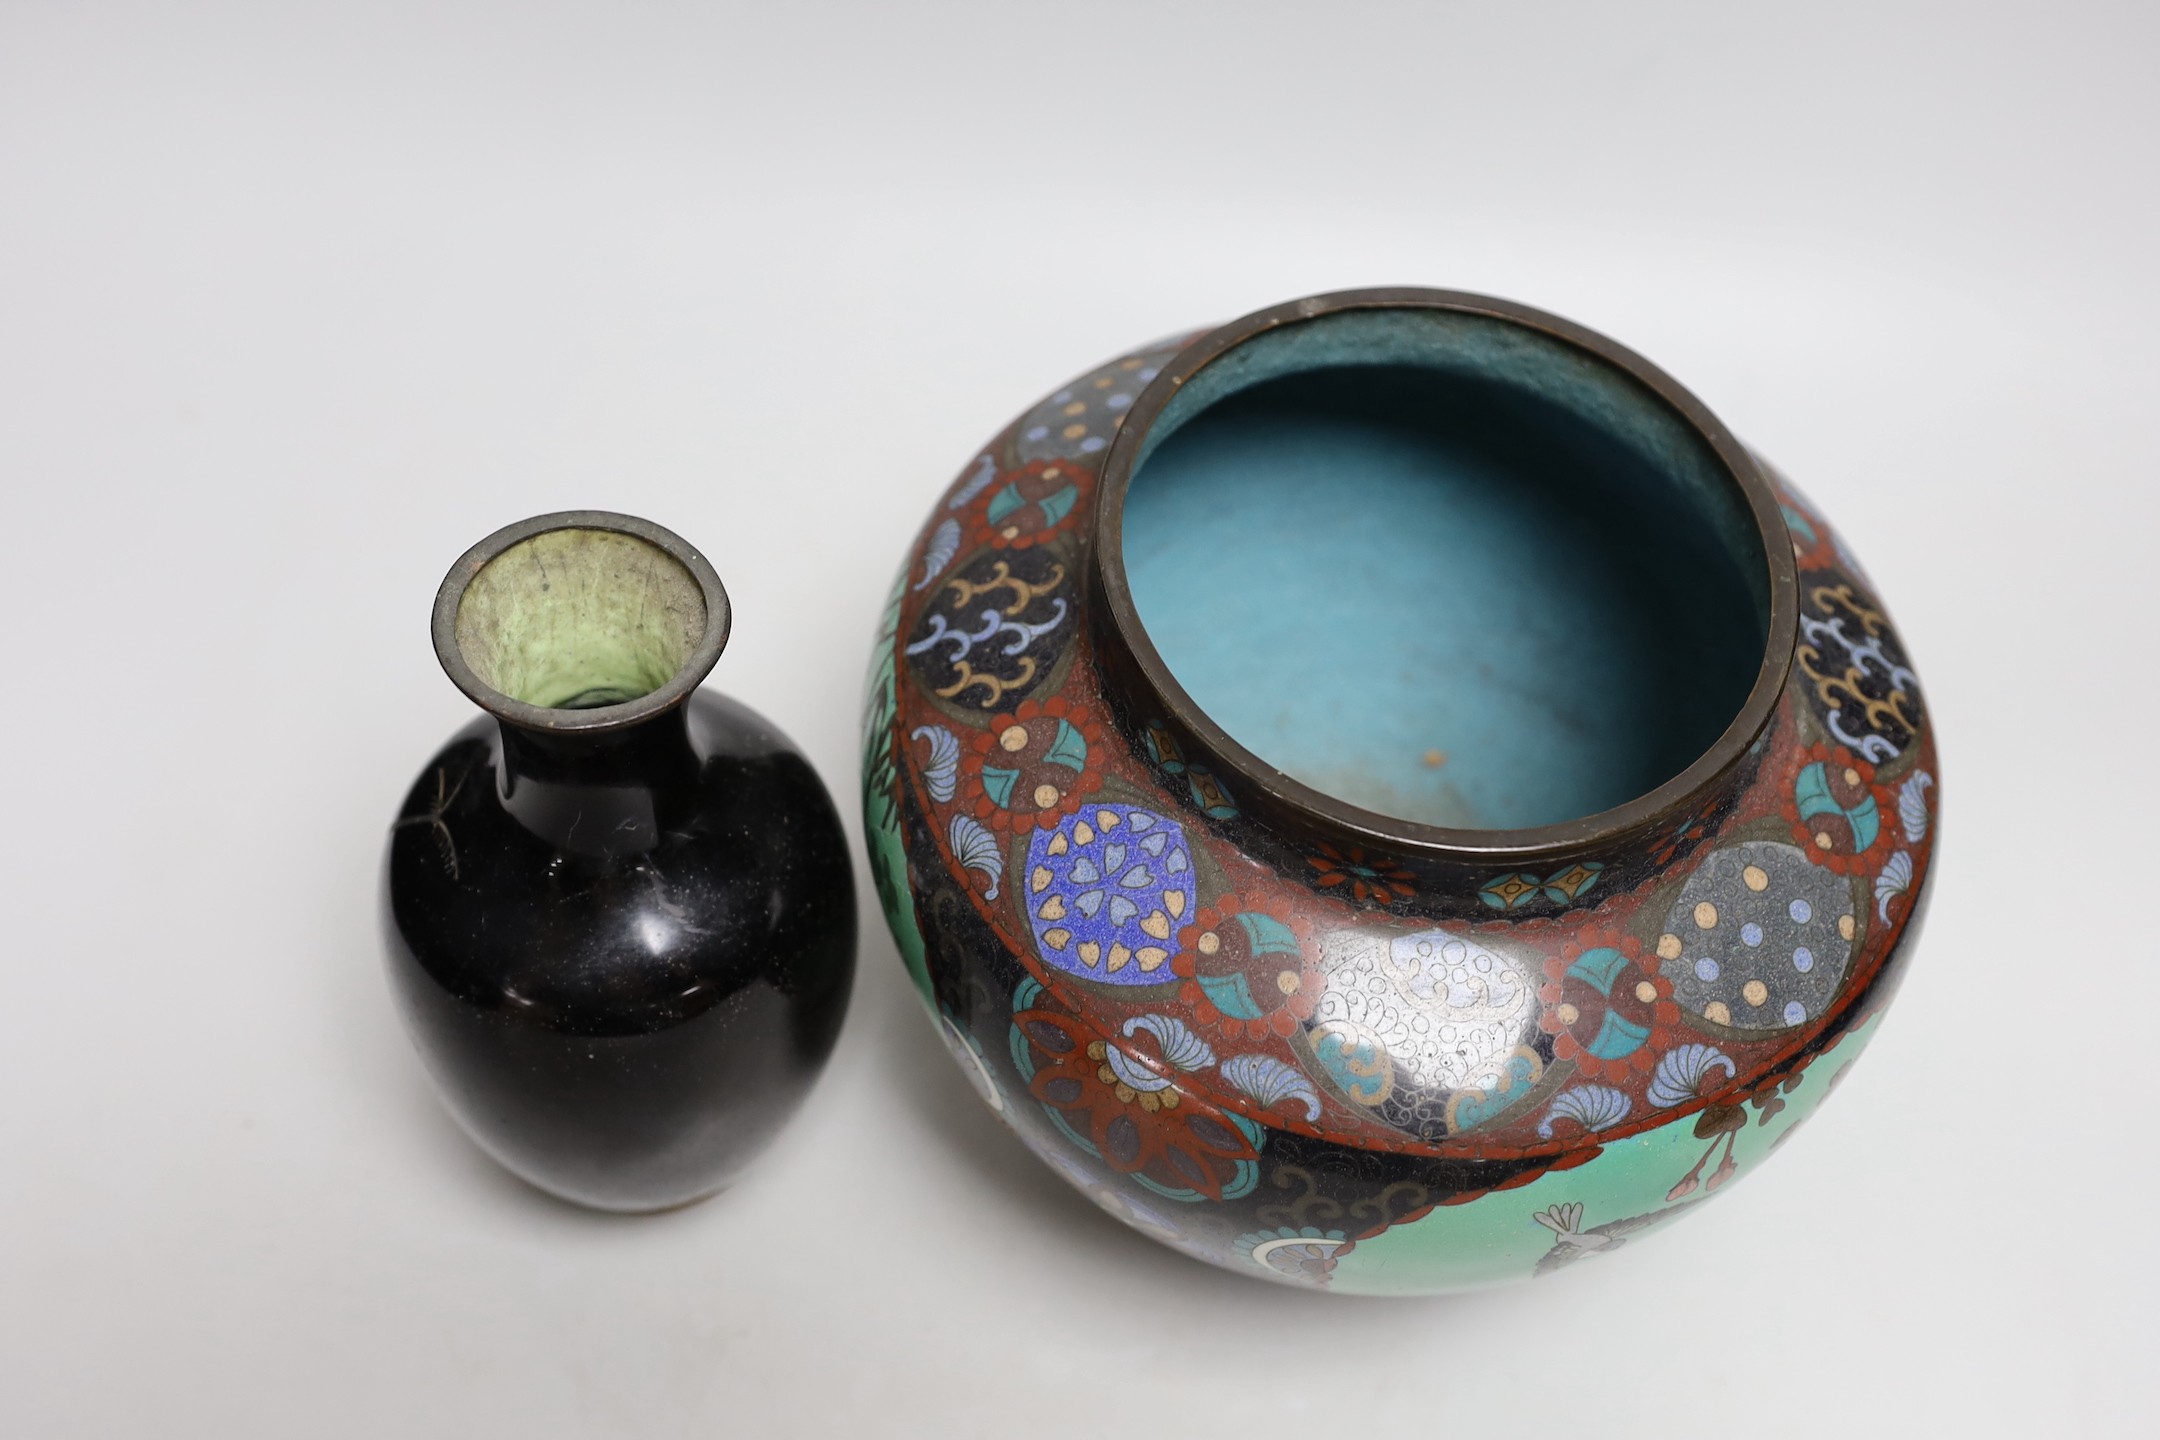 A Japanese cloisonné enamel vase and another smaller vase. Tallest 18cm